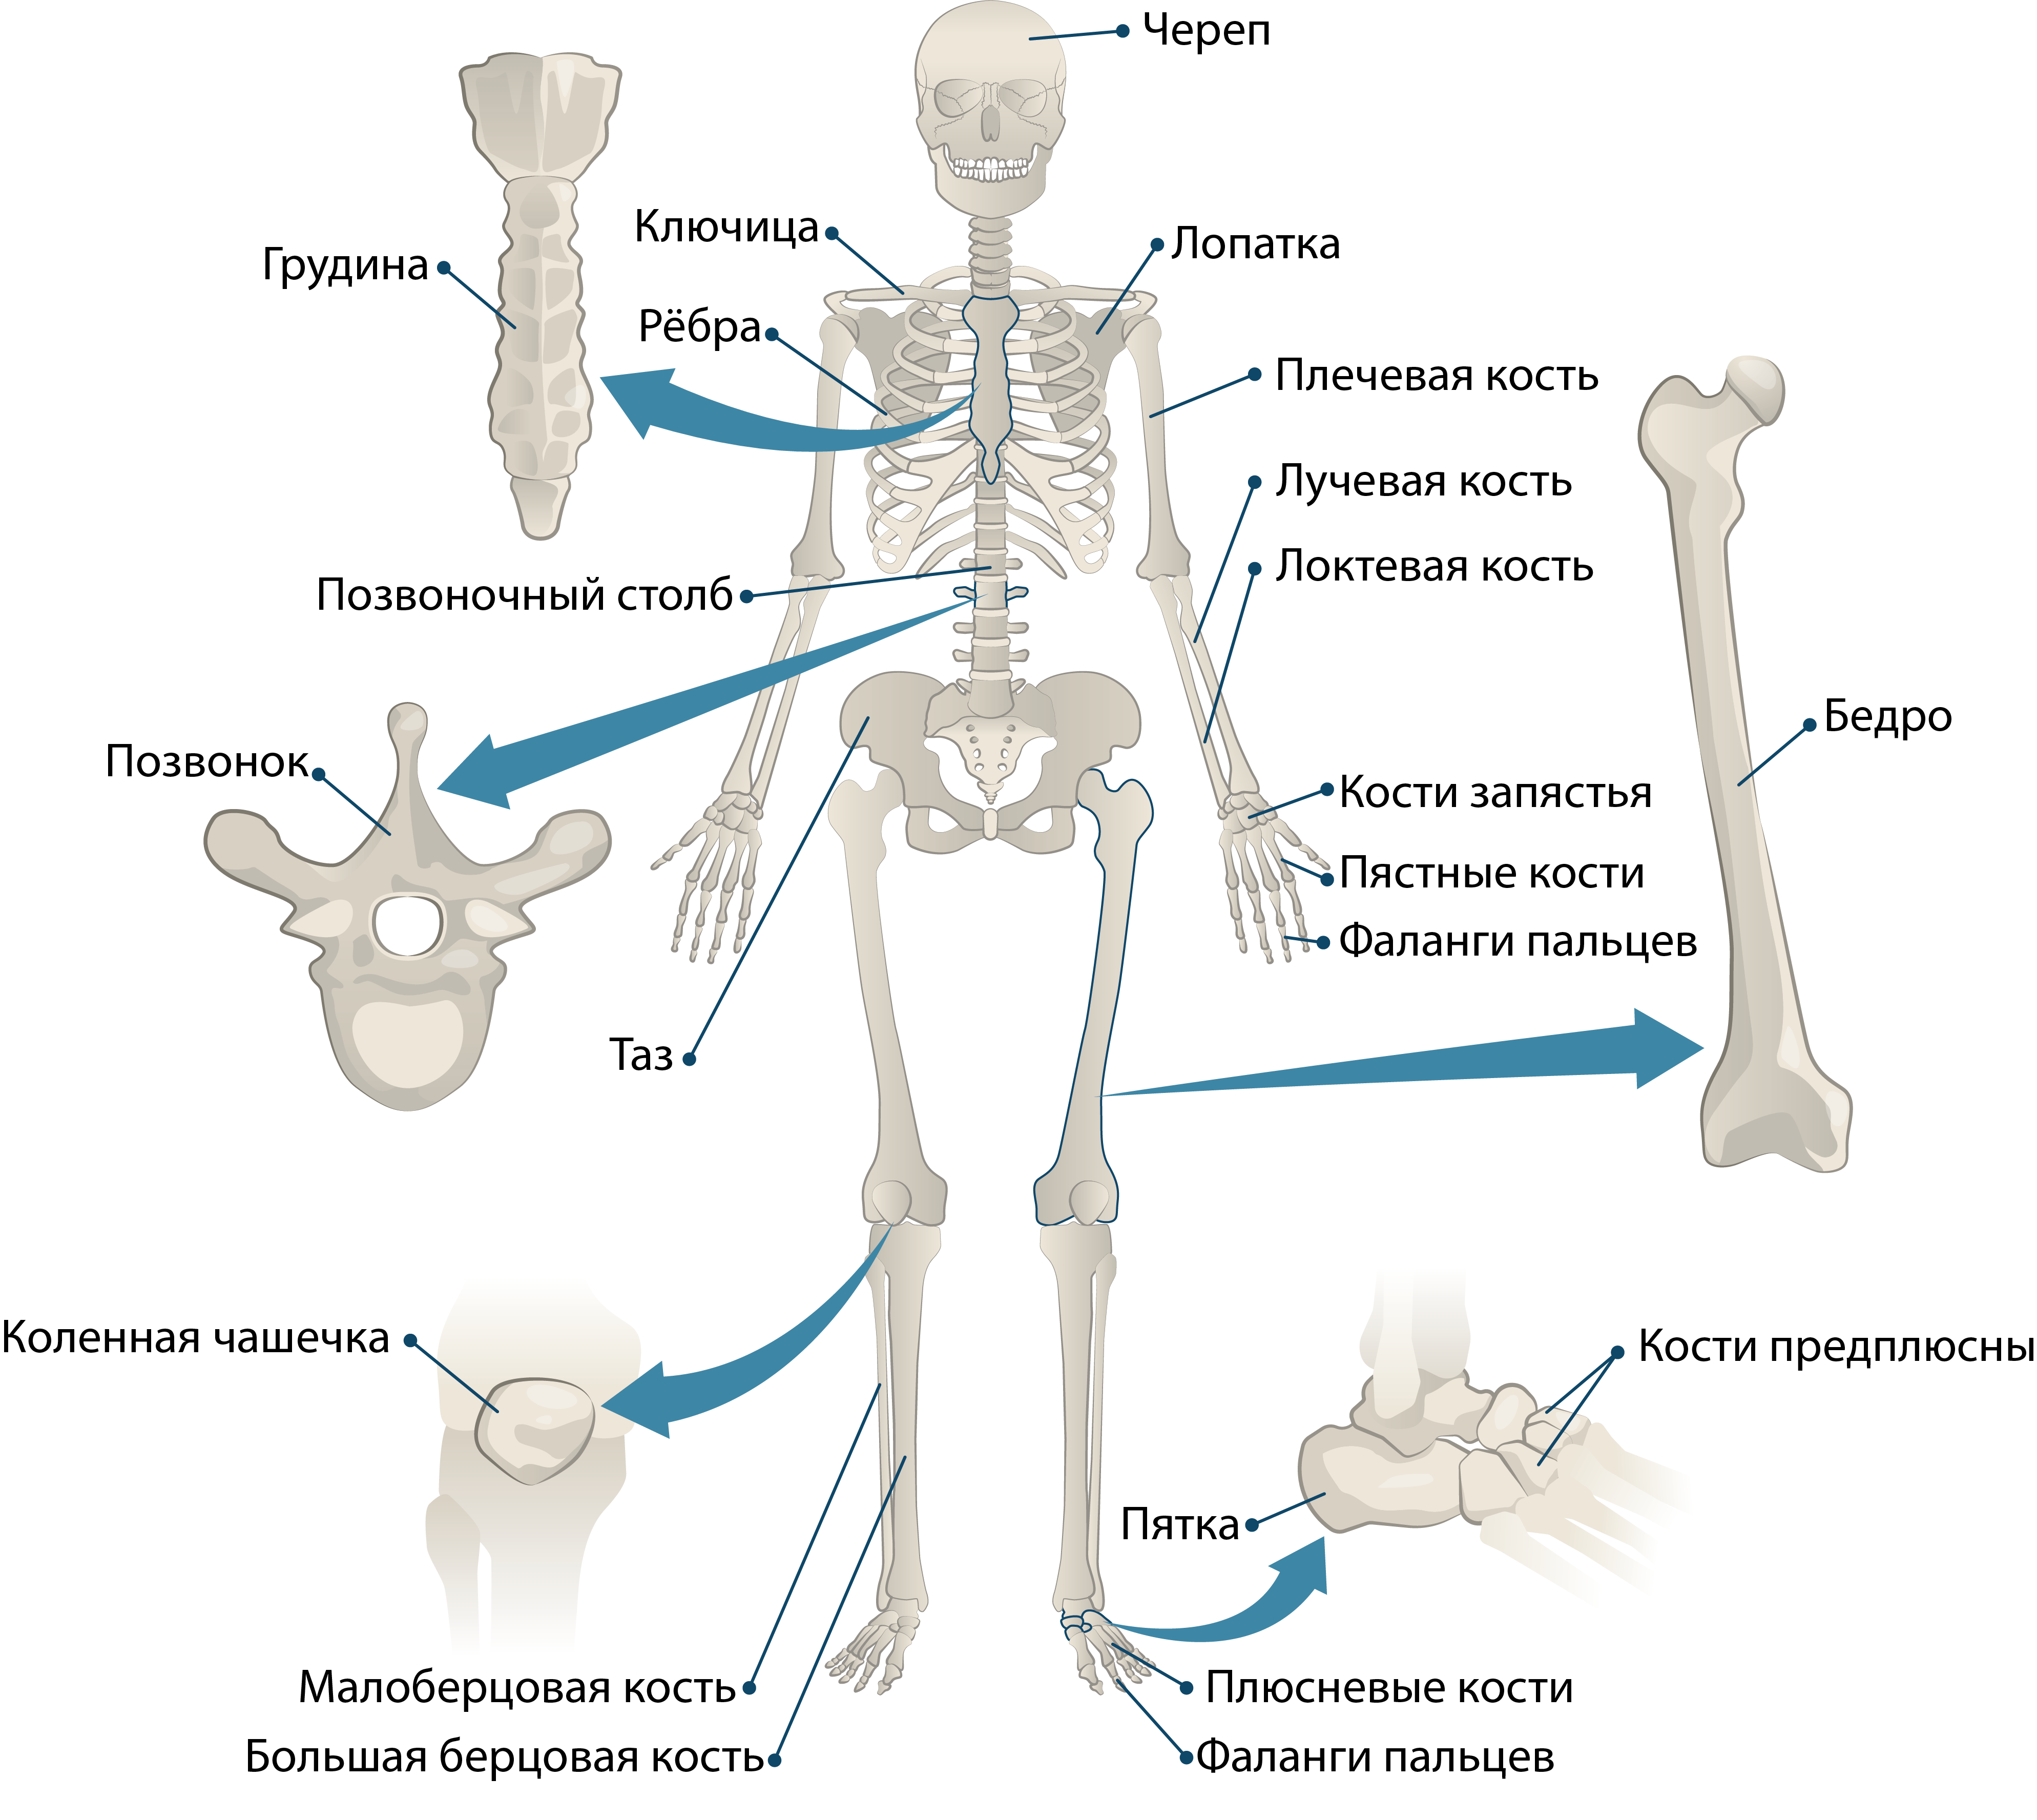 Какой отдел скелета образует кости. Отделы скелета. Отделы костей скелета человека. Отделы скелета человека и кости. Строение отделов скелета.